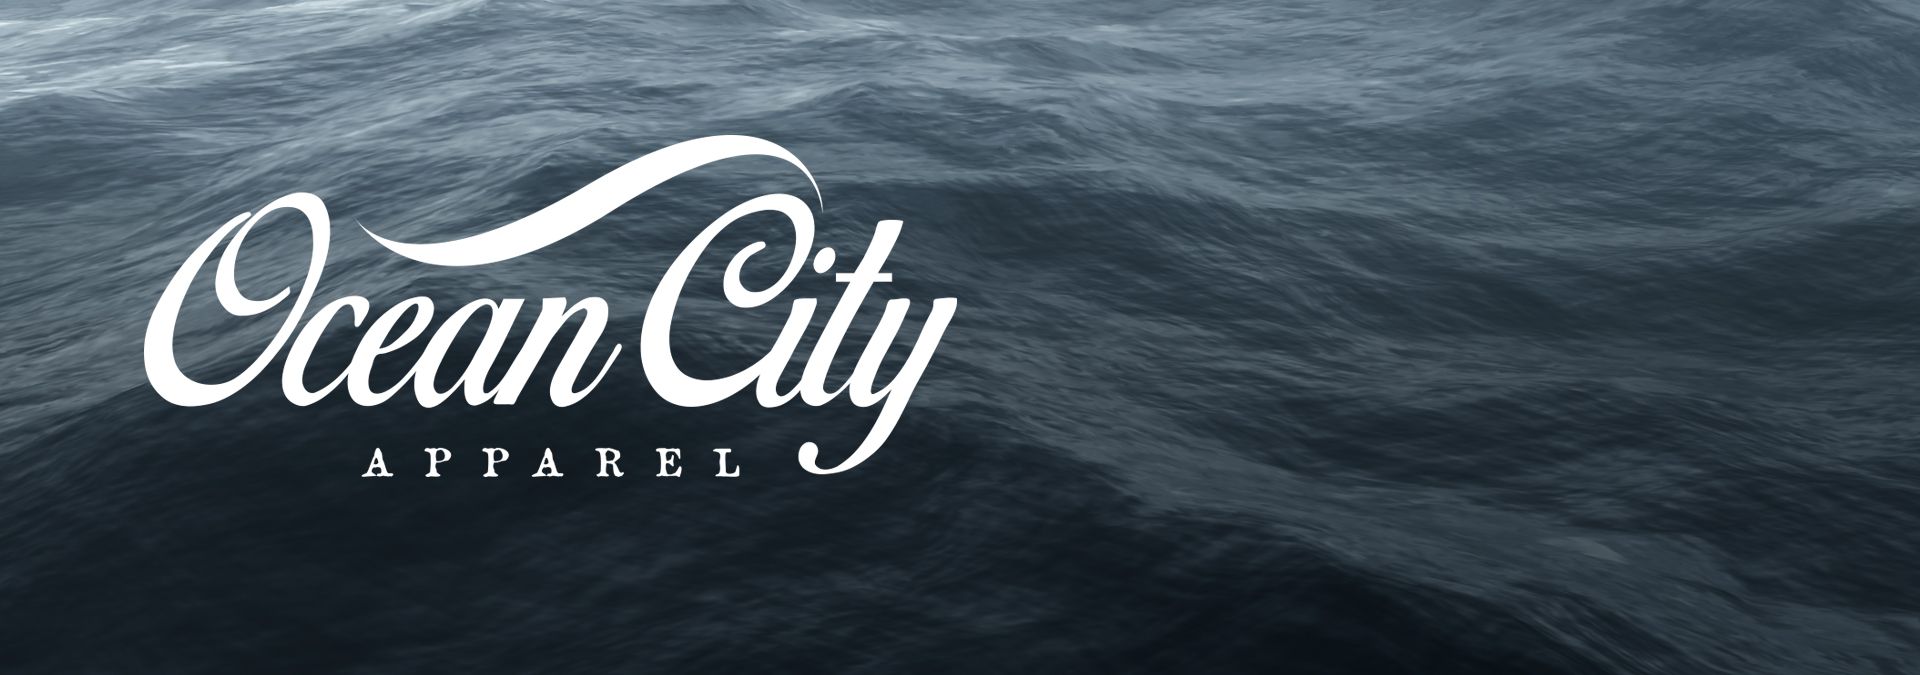 Ocean City Apparel Plymouth Main Slide One